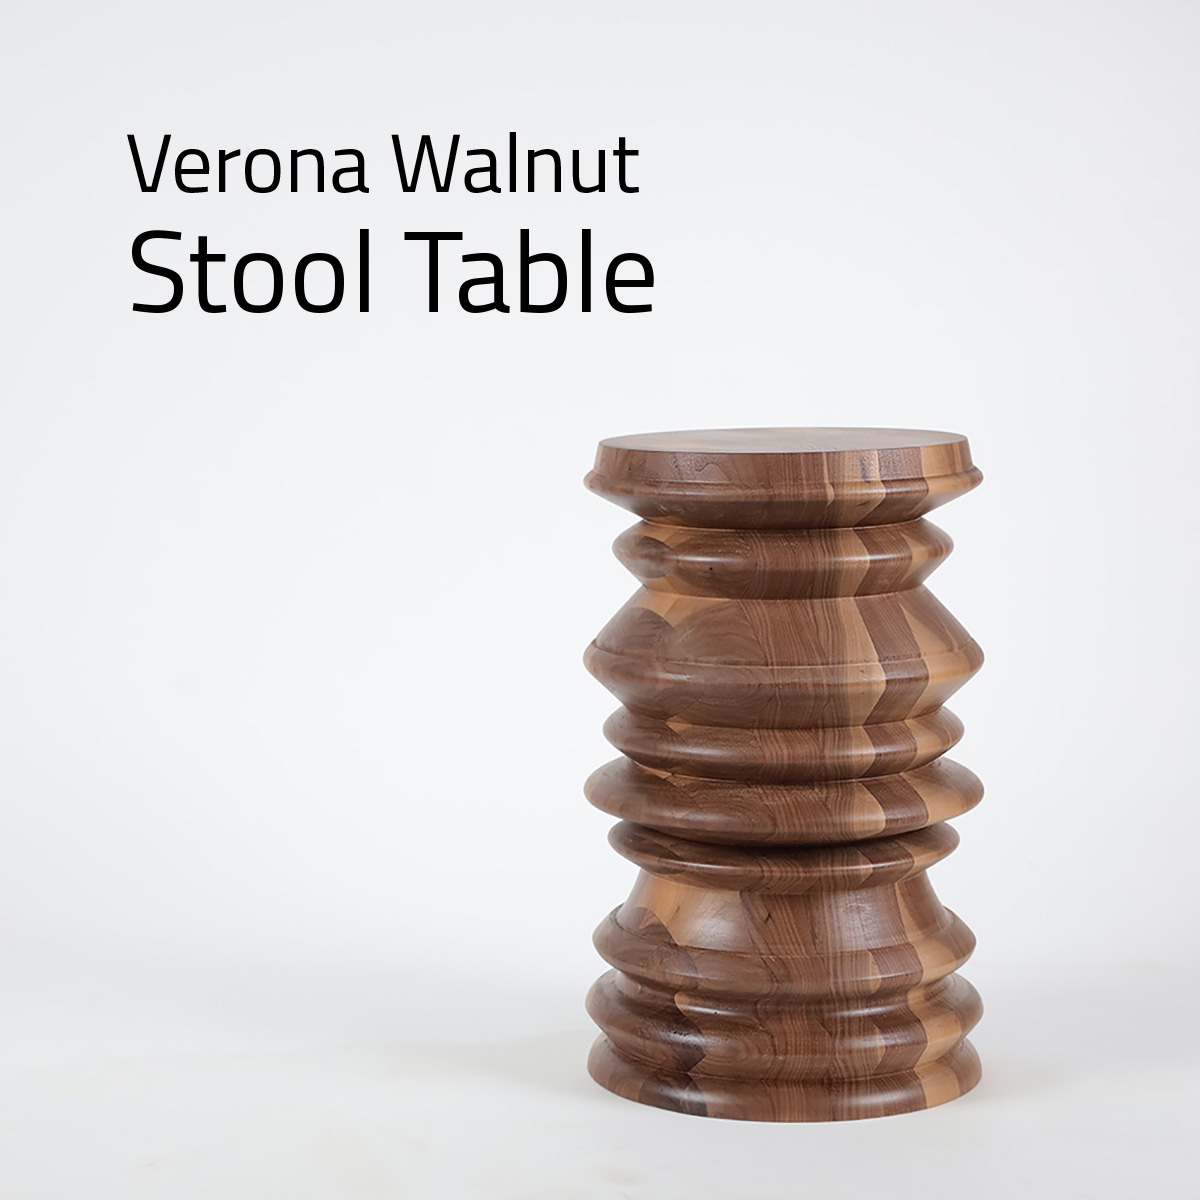 Verona Walnut Stool Table